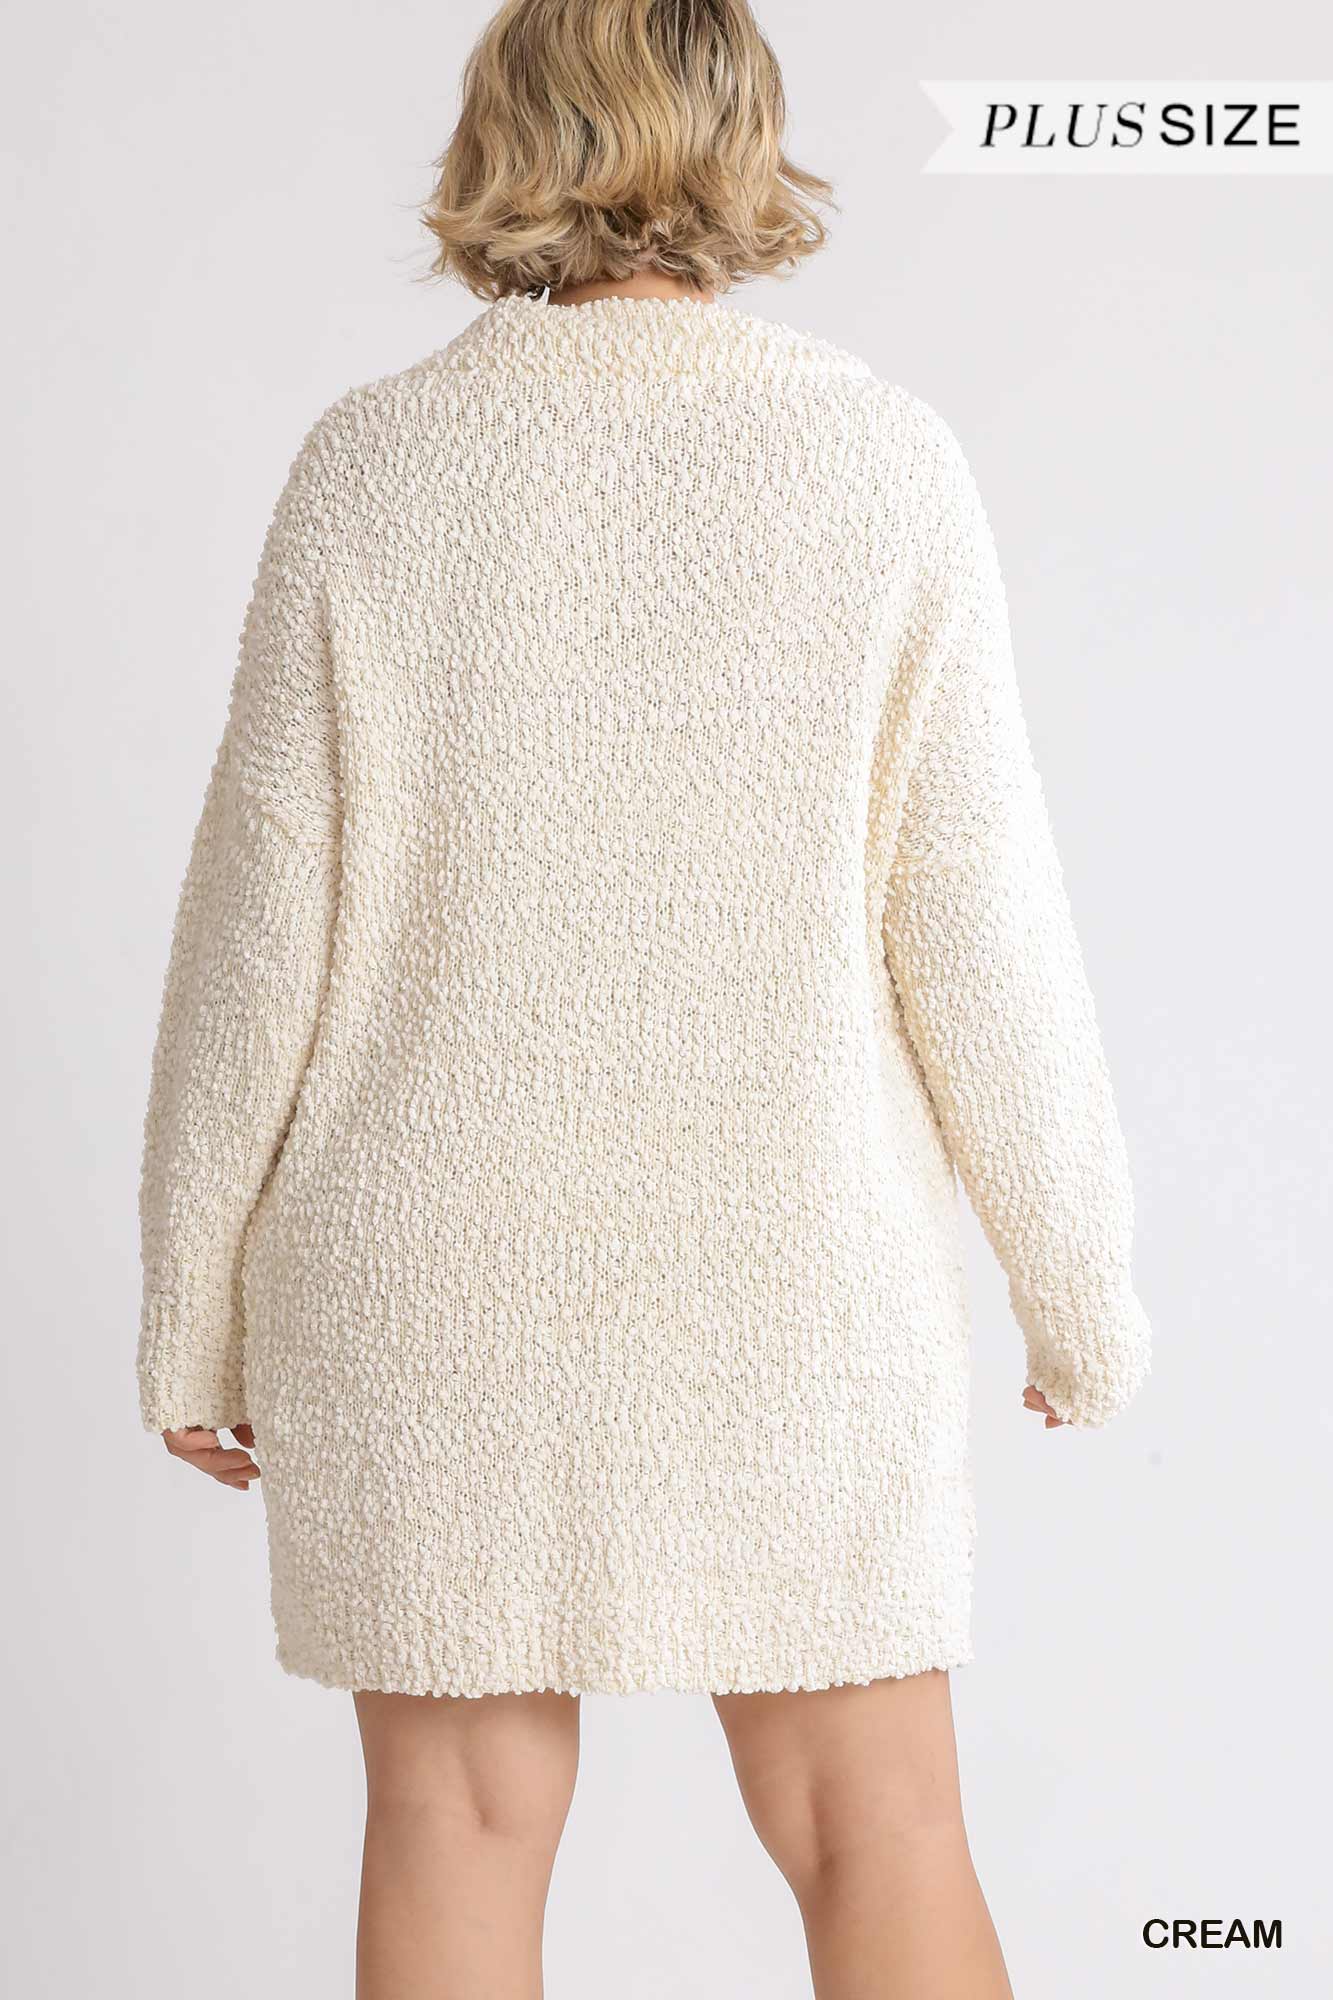 Plus Size Cream Beige High Cowl Neck Long Sleeve Sweater Mini Dress Dresses jehouze 